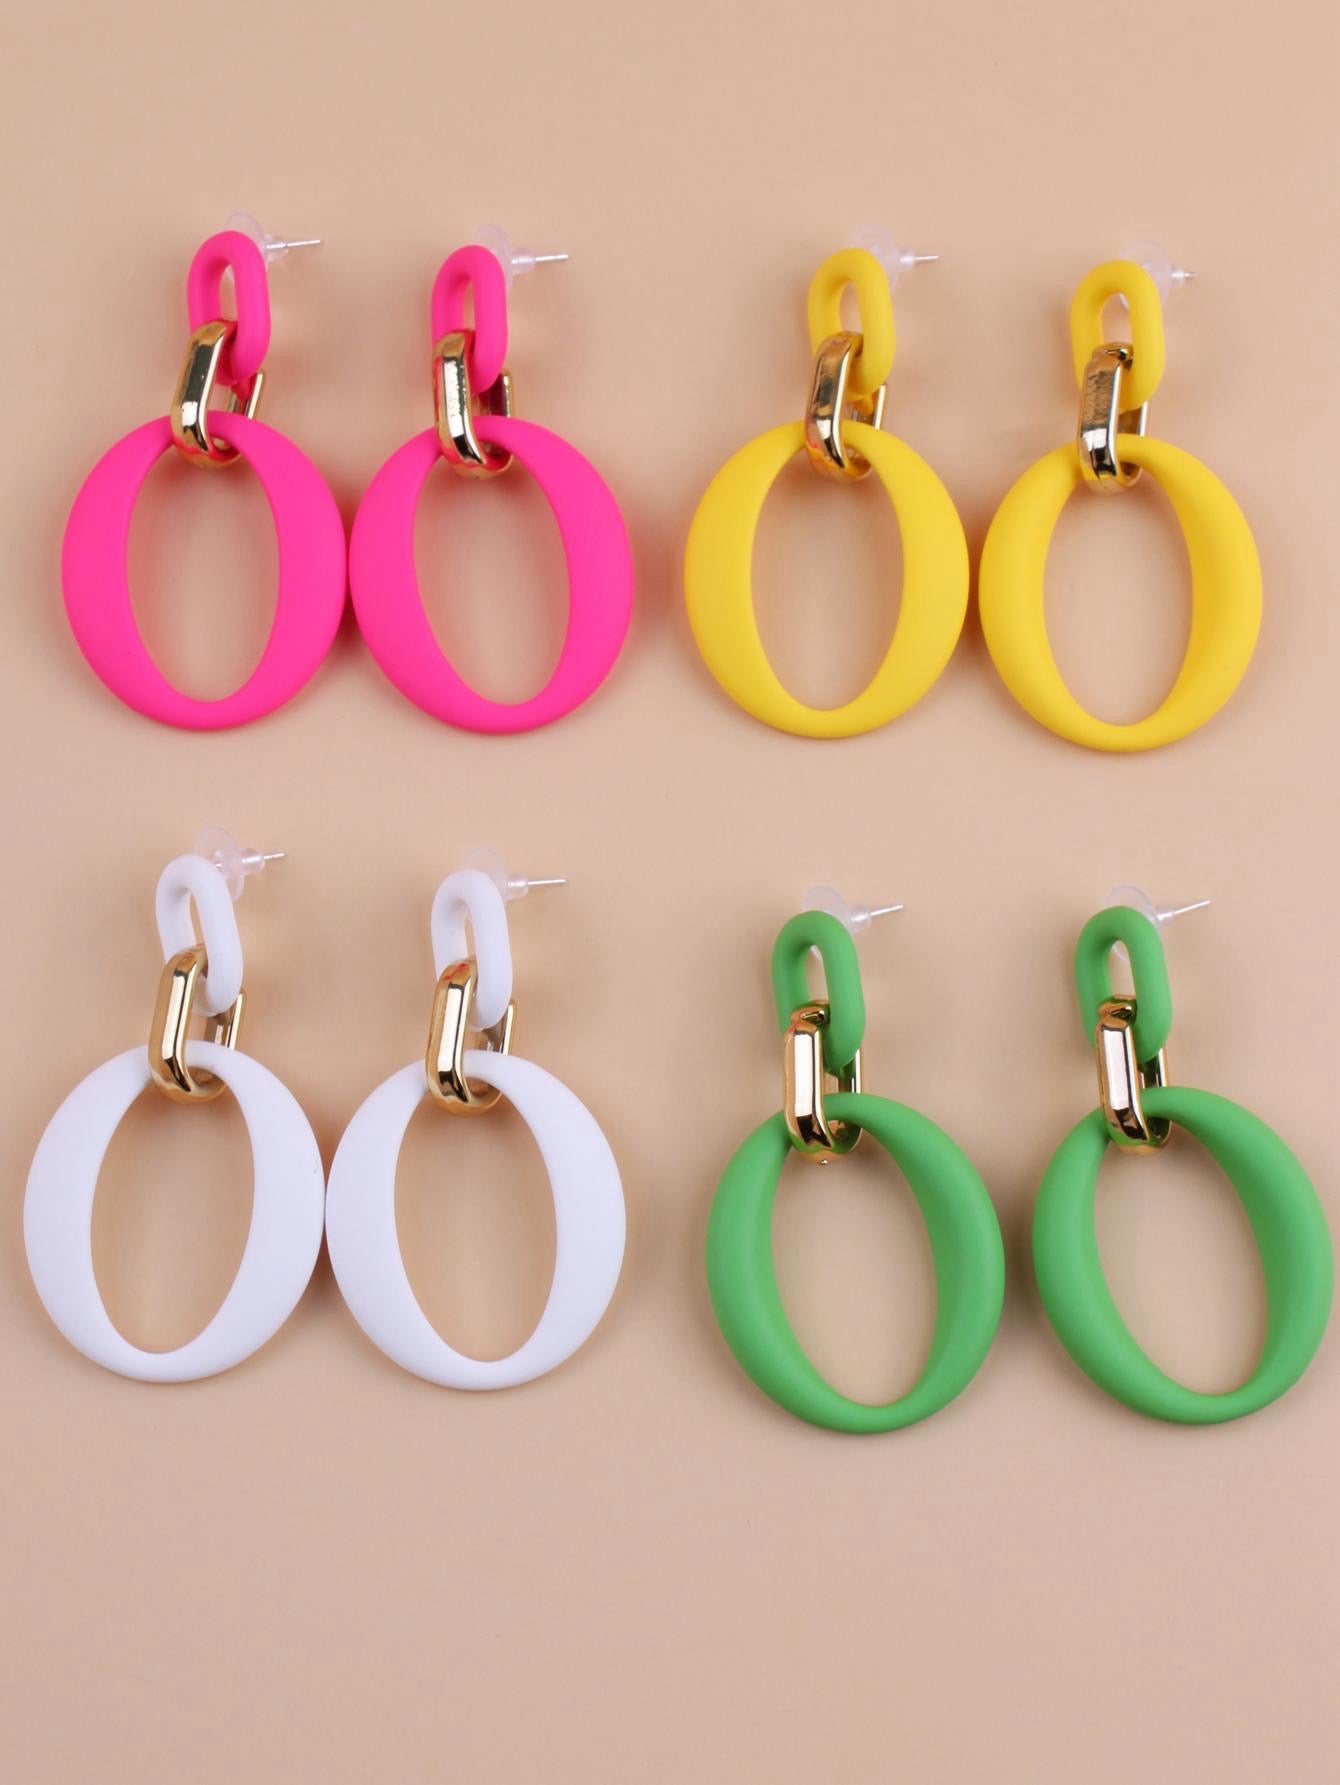 Chain Link Earrings-Pink